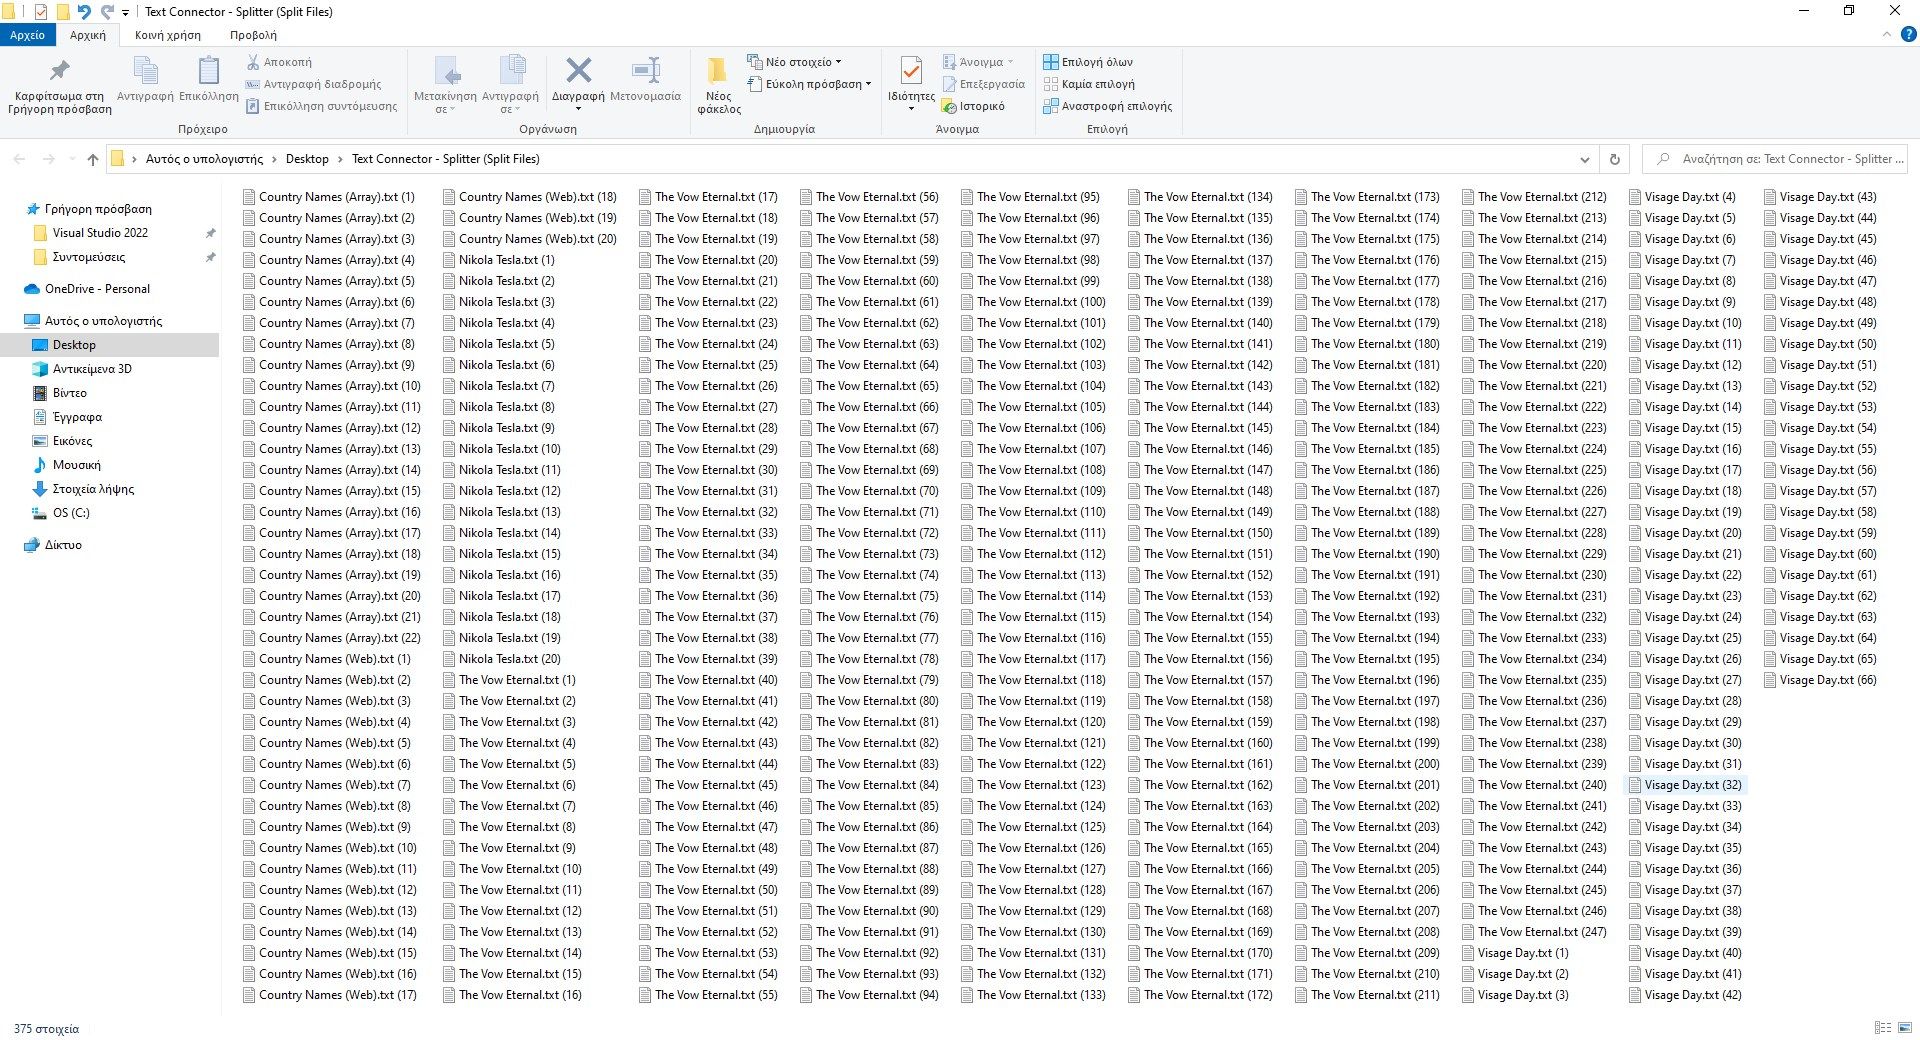 All split files placed inside a single folder